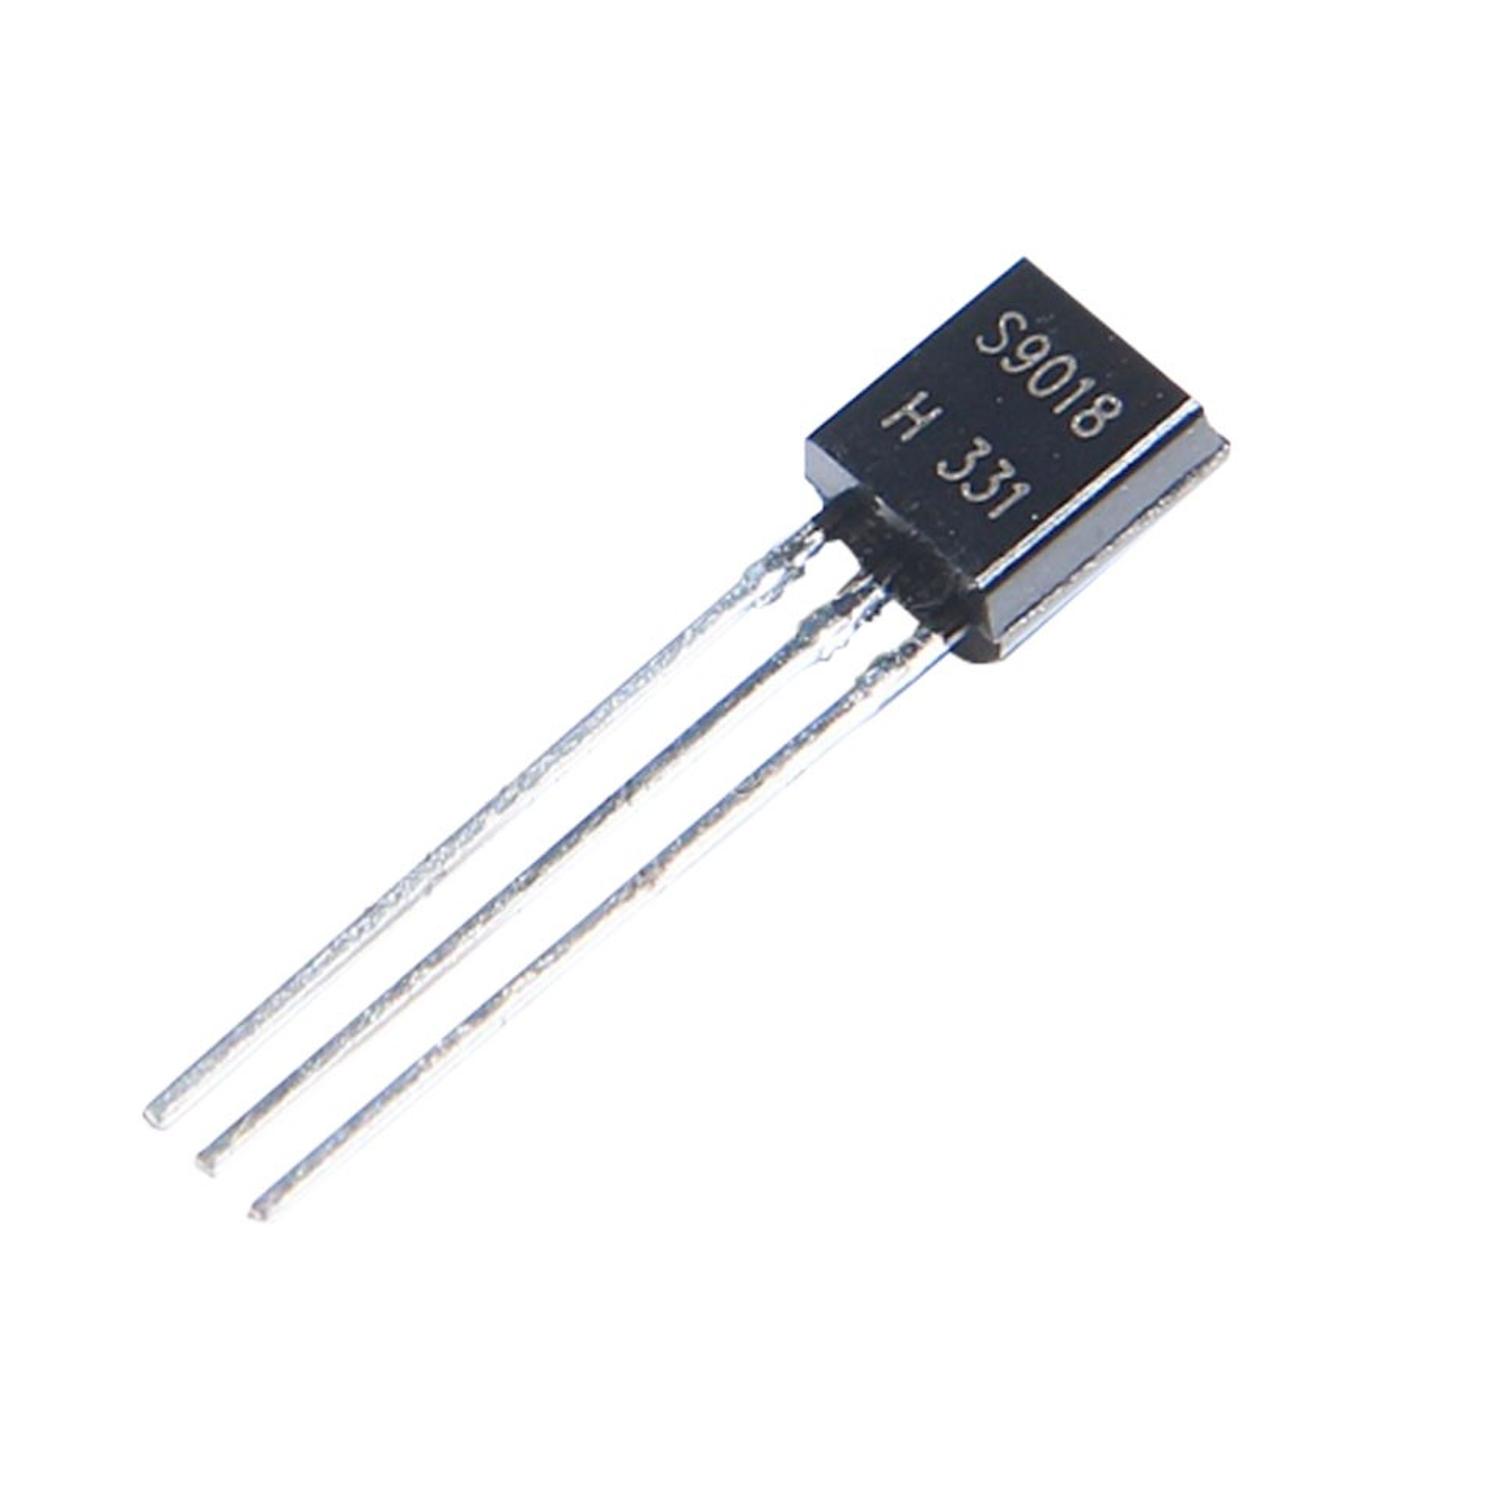 Transistor S9018